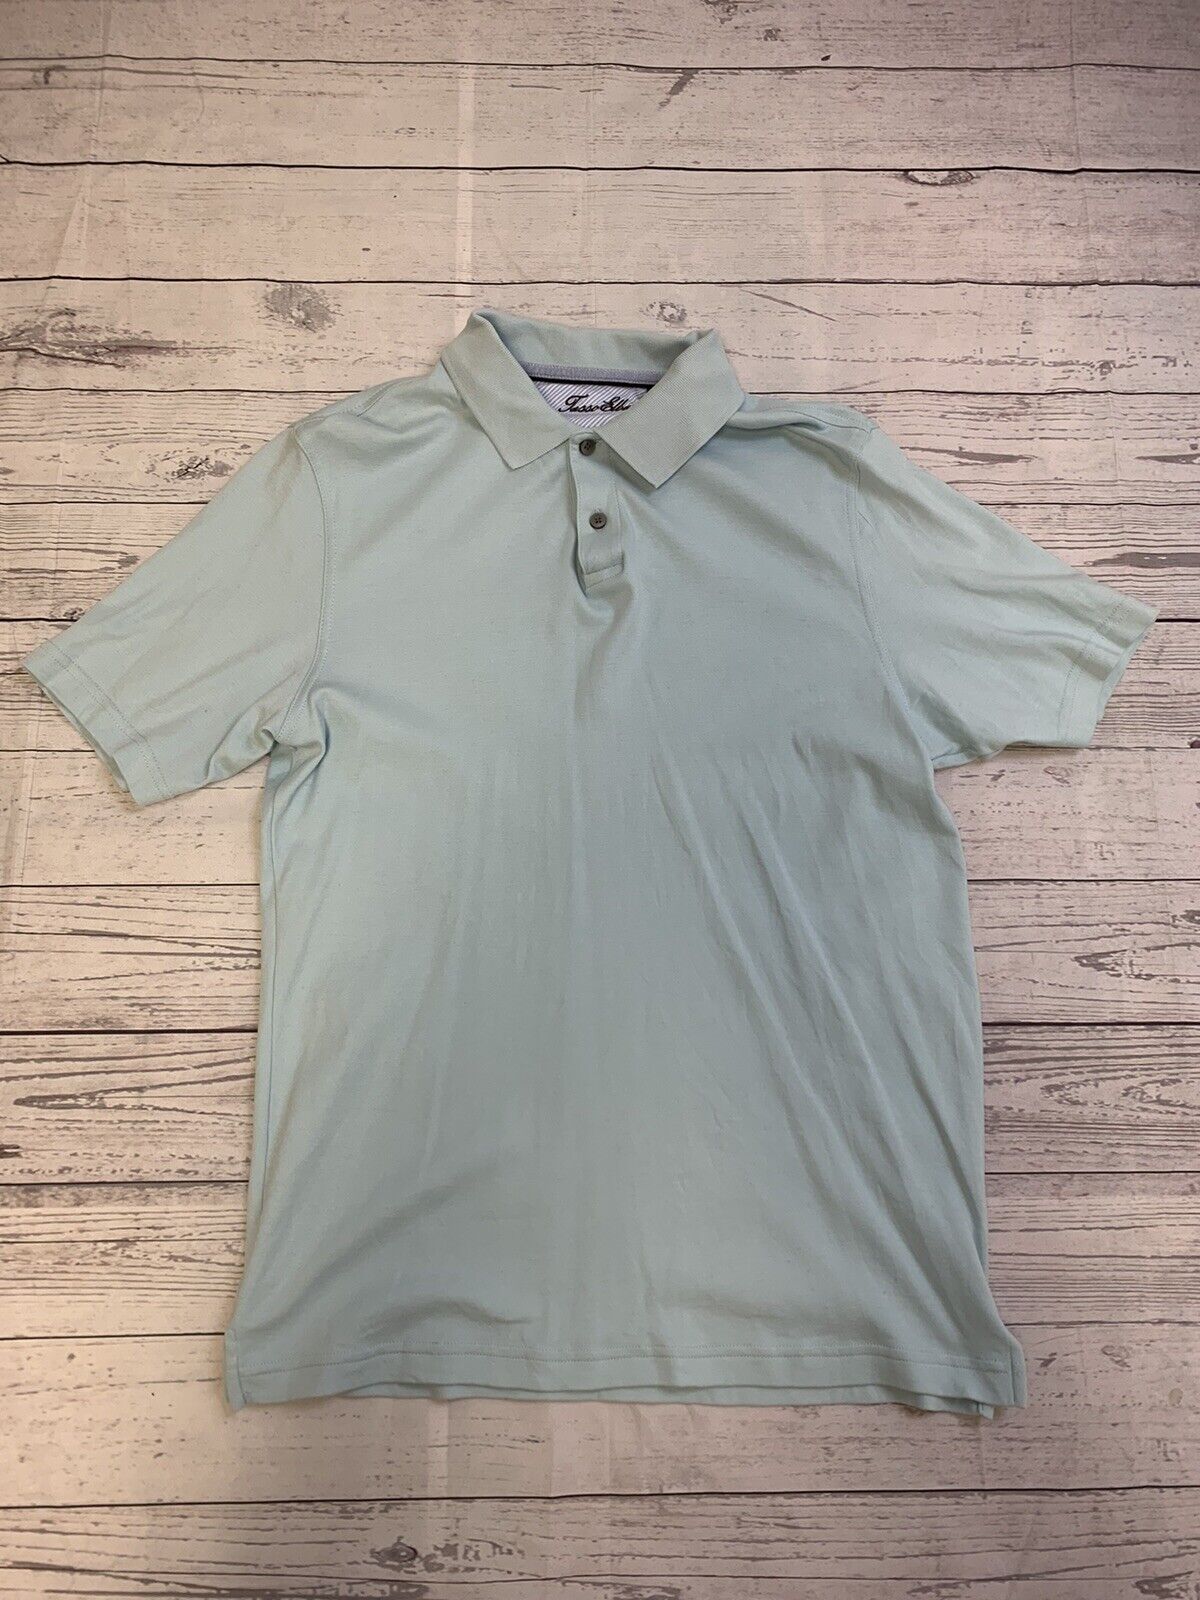 Men's Tasso Elba Blue Shirt Polo Short Sleeve Size Small